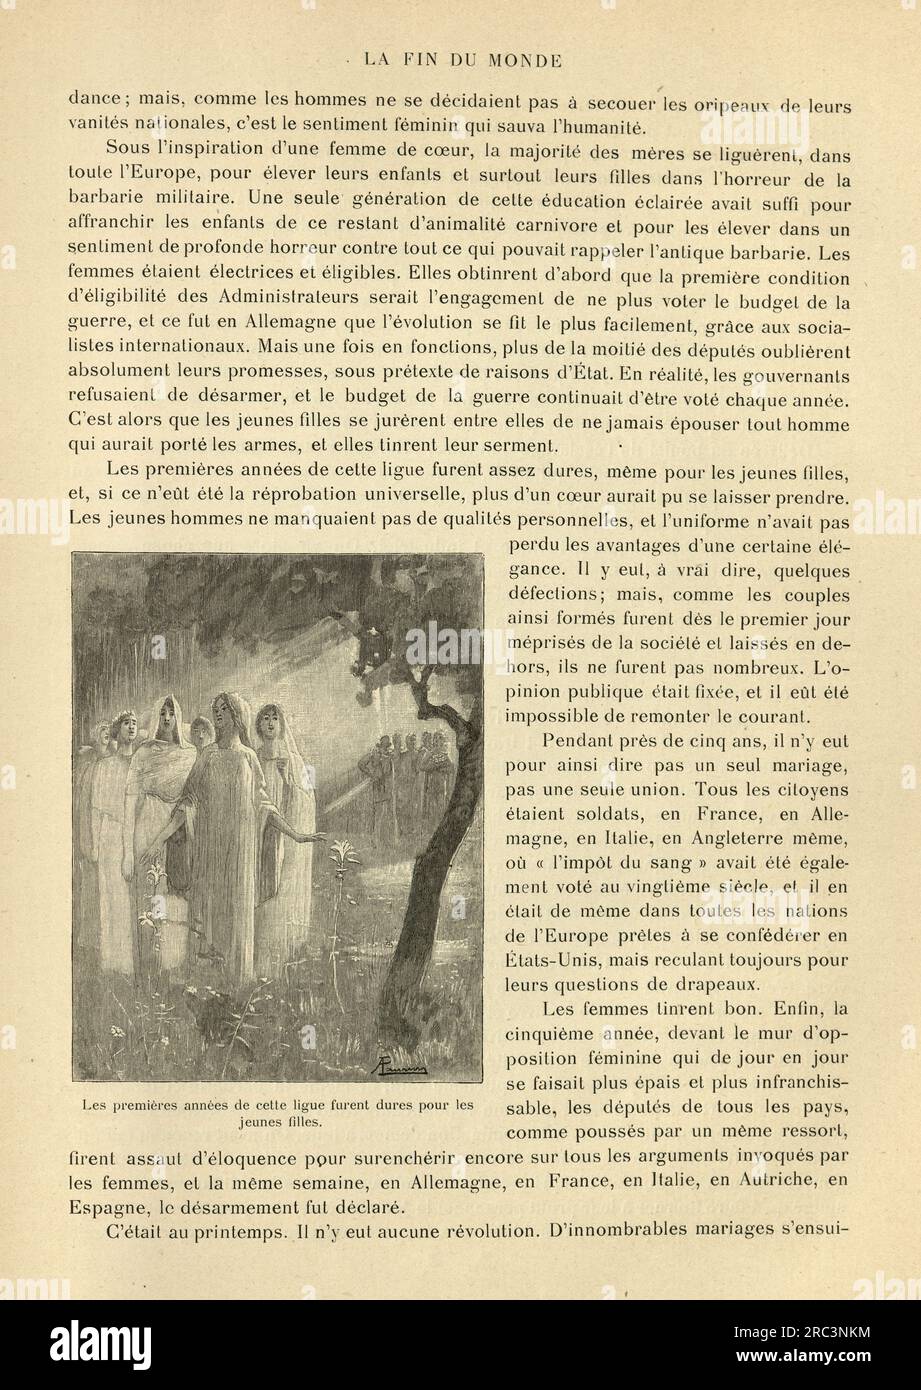 Page from a French Victorian science fiction story, The End of the World, Les premieres annees de cette ligue furent dures pour les jeunes filles Stock Photo